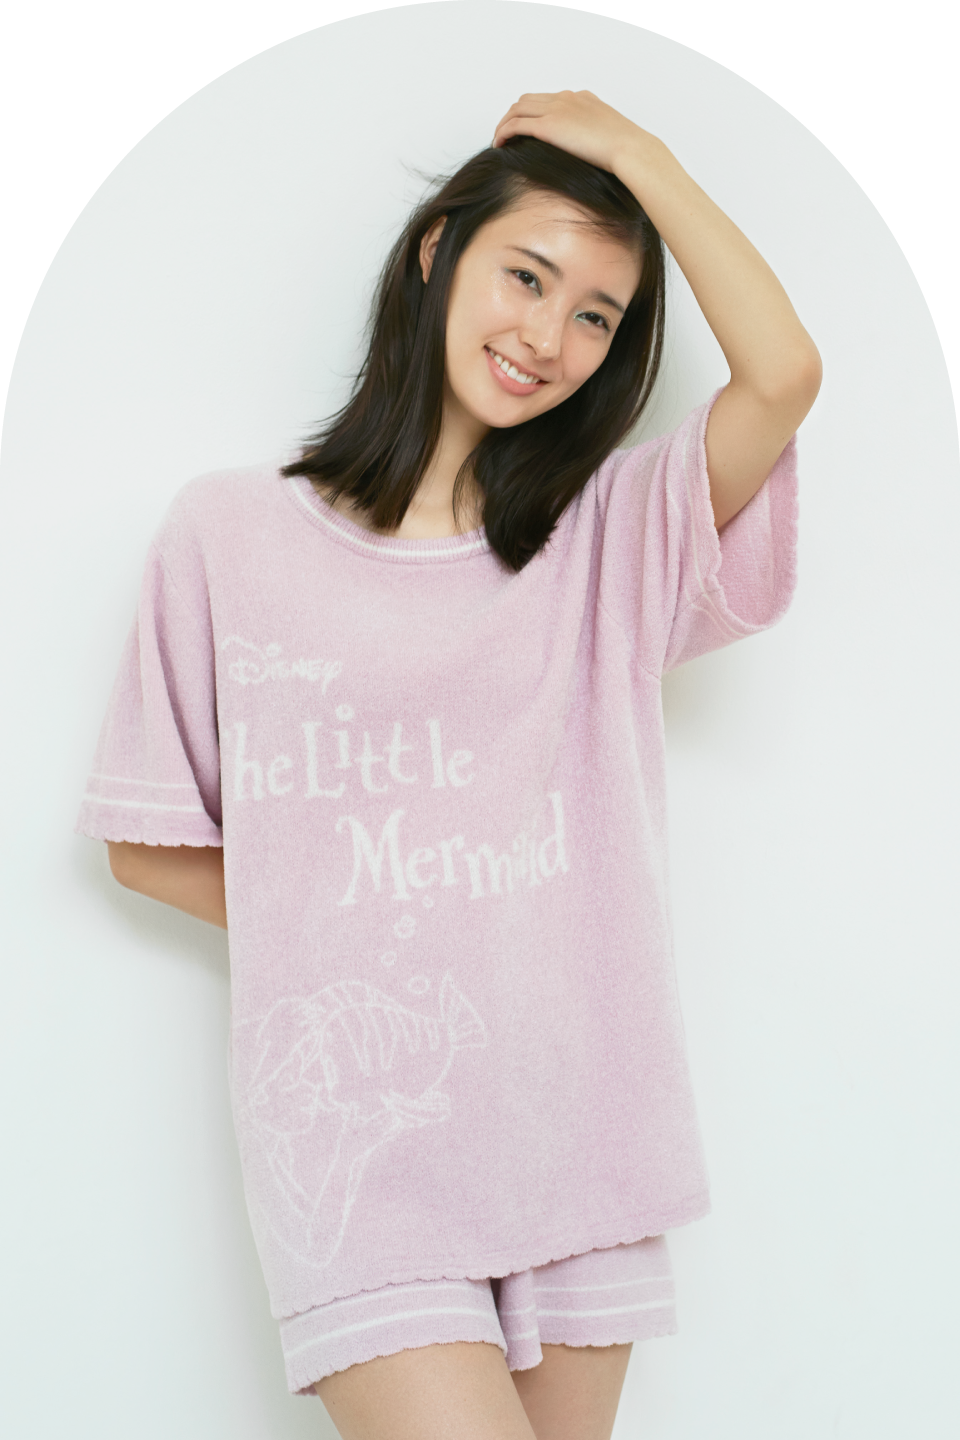 The Little Mermaid - model10